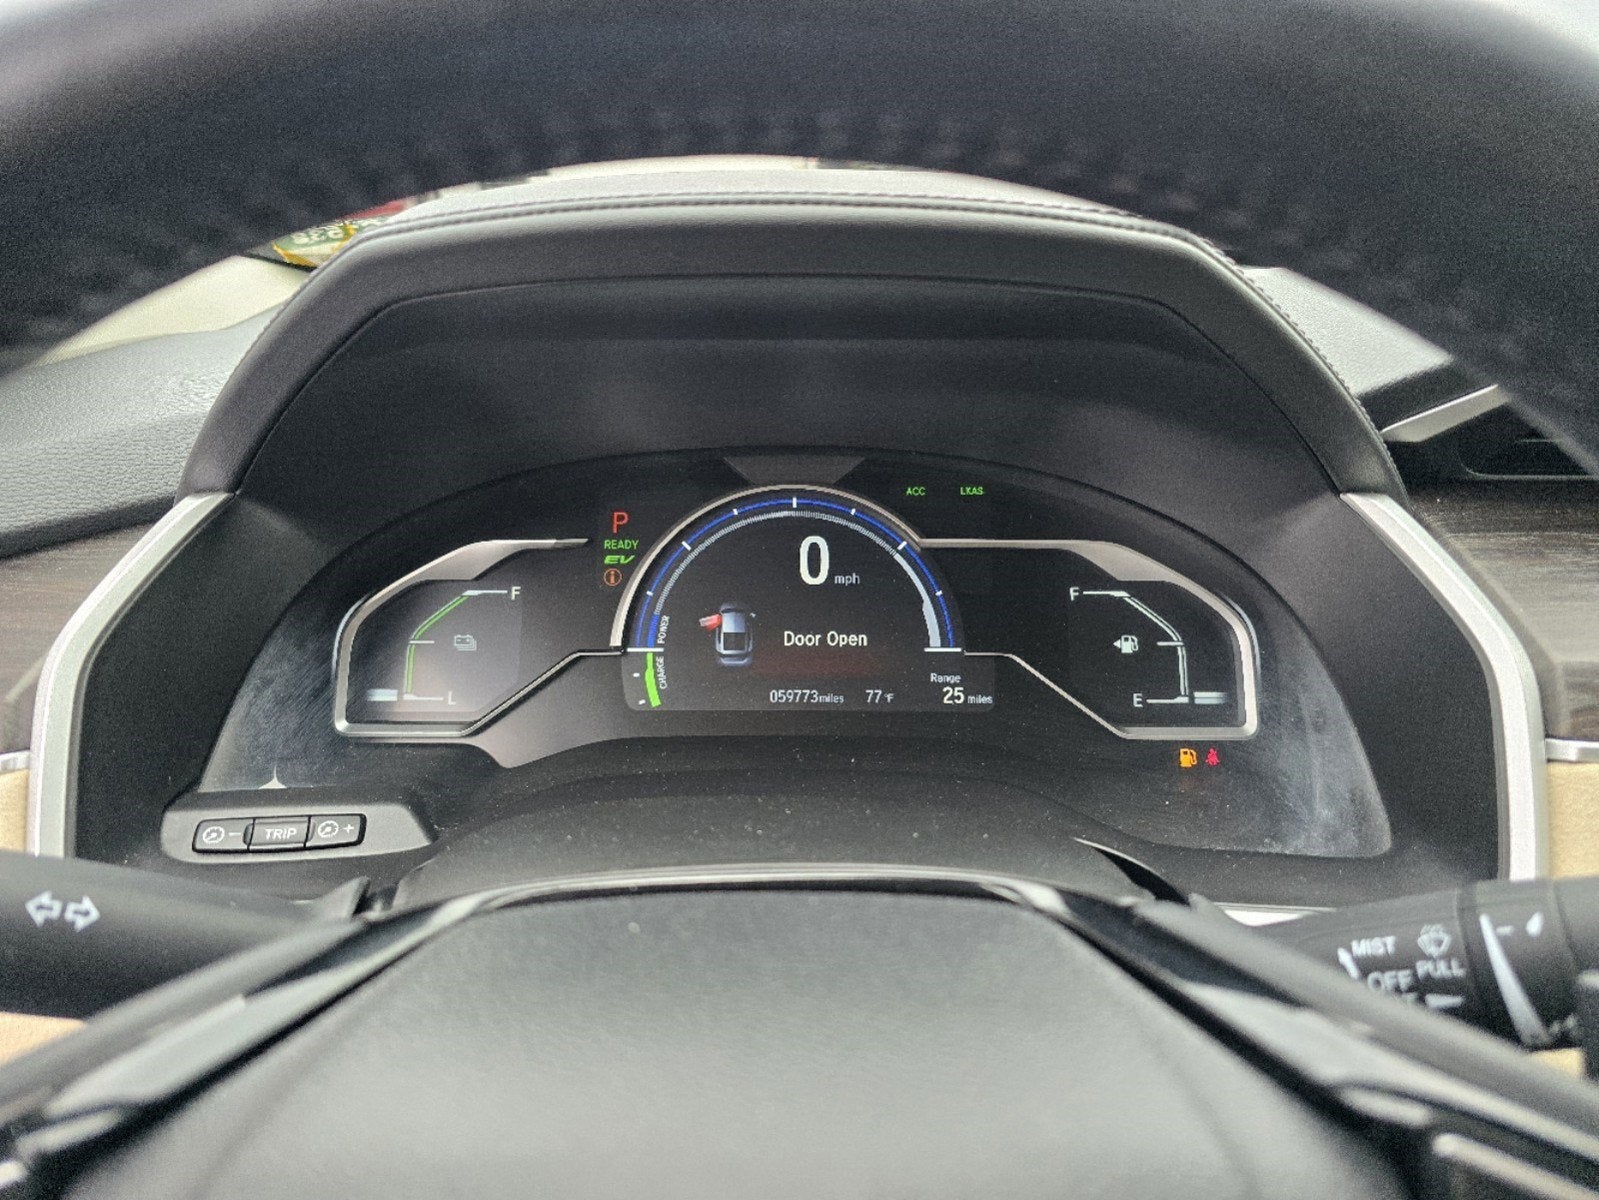 2018 Honda Clarity Plug-In Hybrid Touring